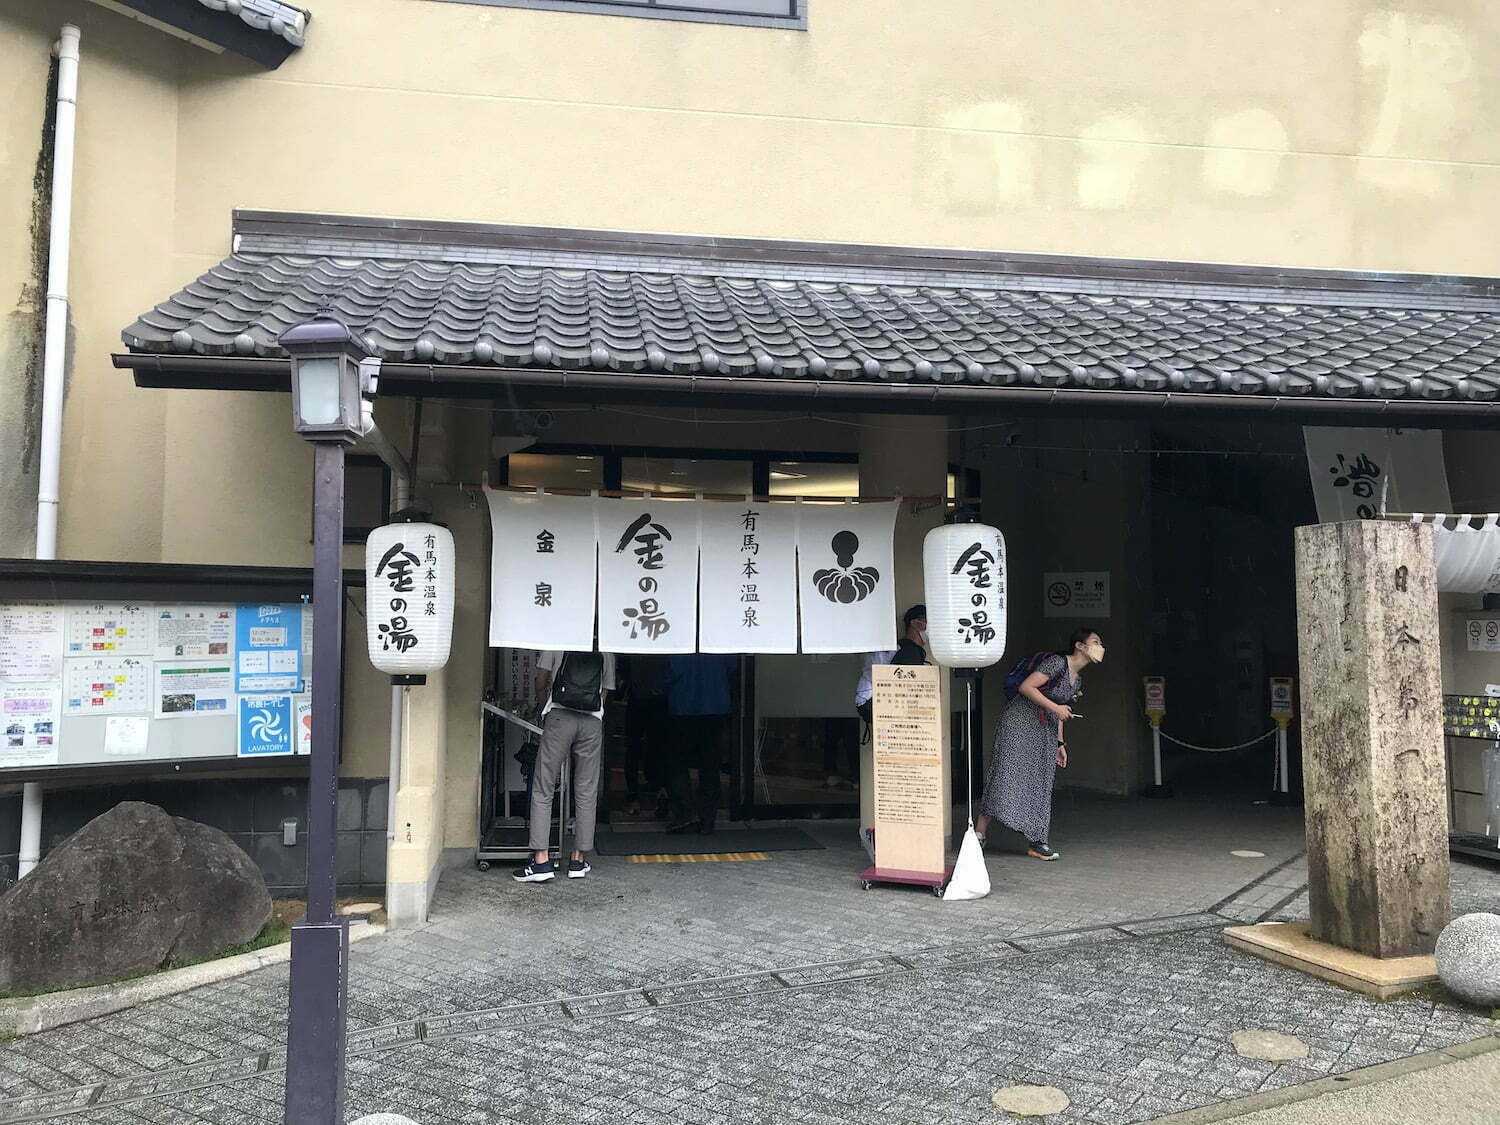 Kin no yu, Golden hot spring